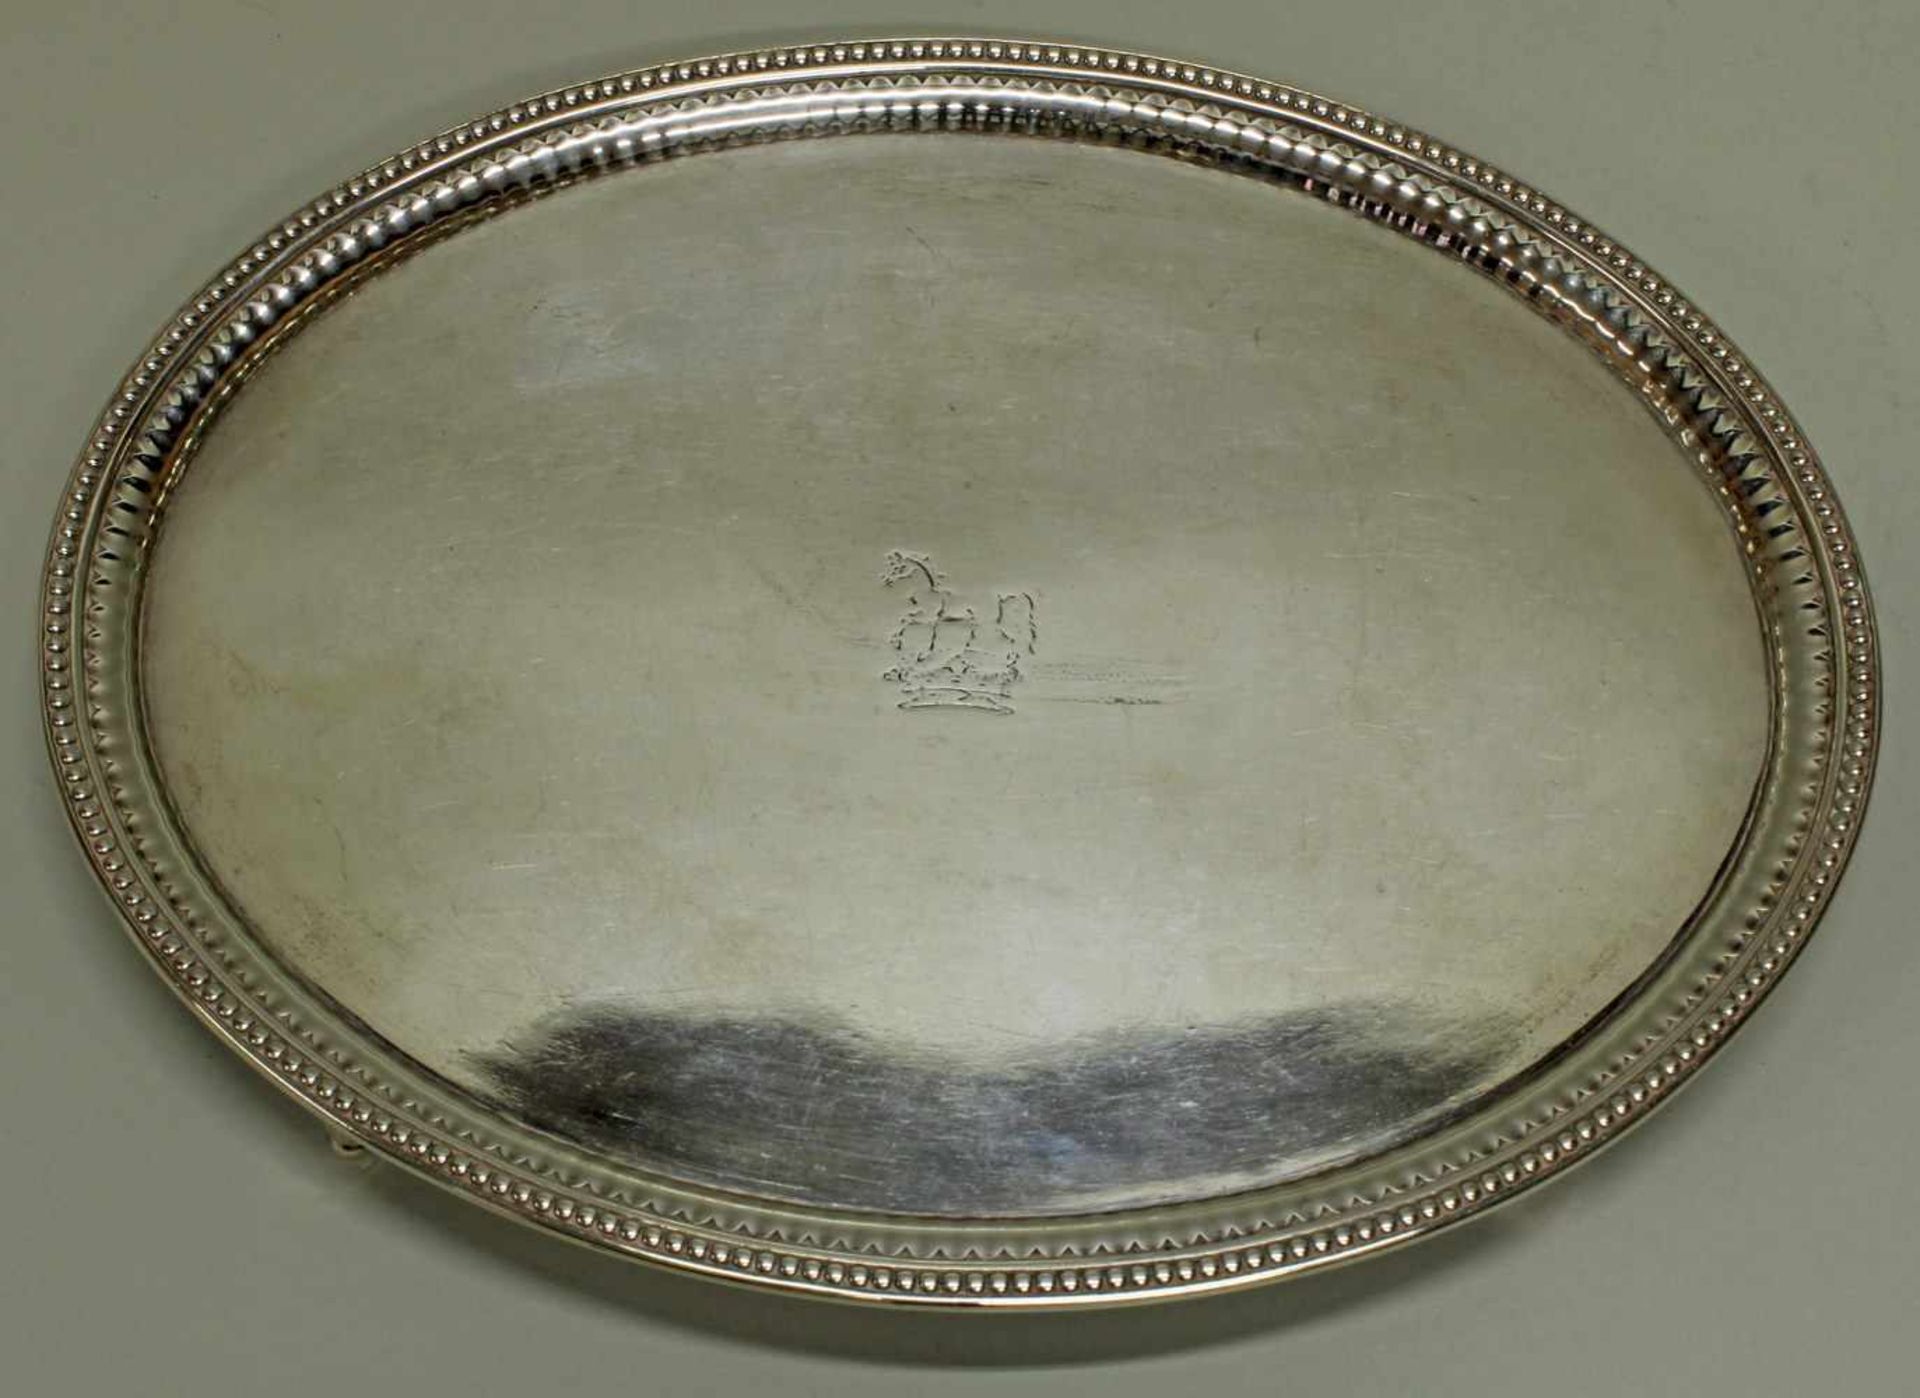 Salver, Silber 925, London, 1783, John Wakelin & William Taylor, oval, glatter Spiegel mit Emblem, - Image 3 of 6